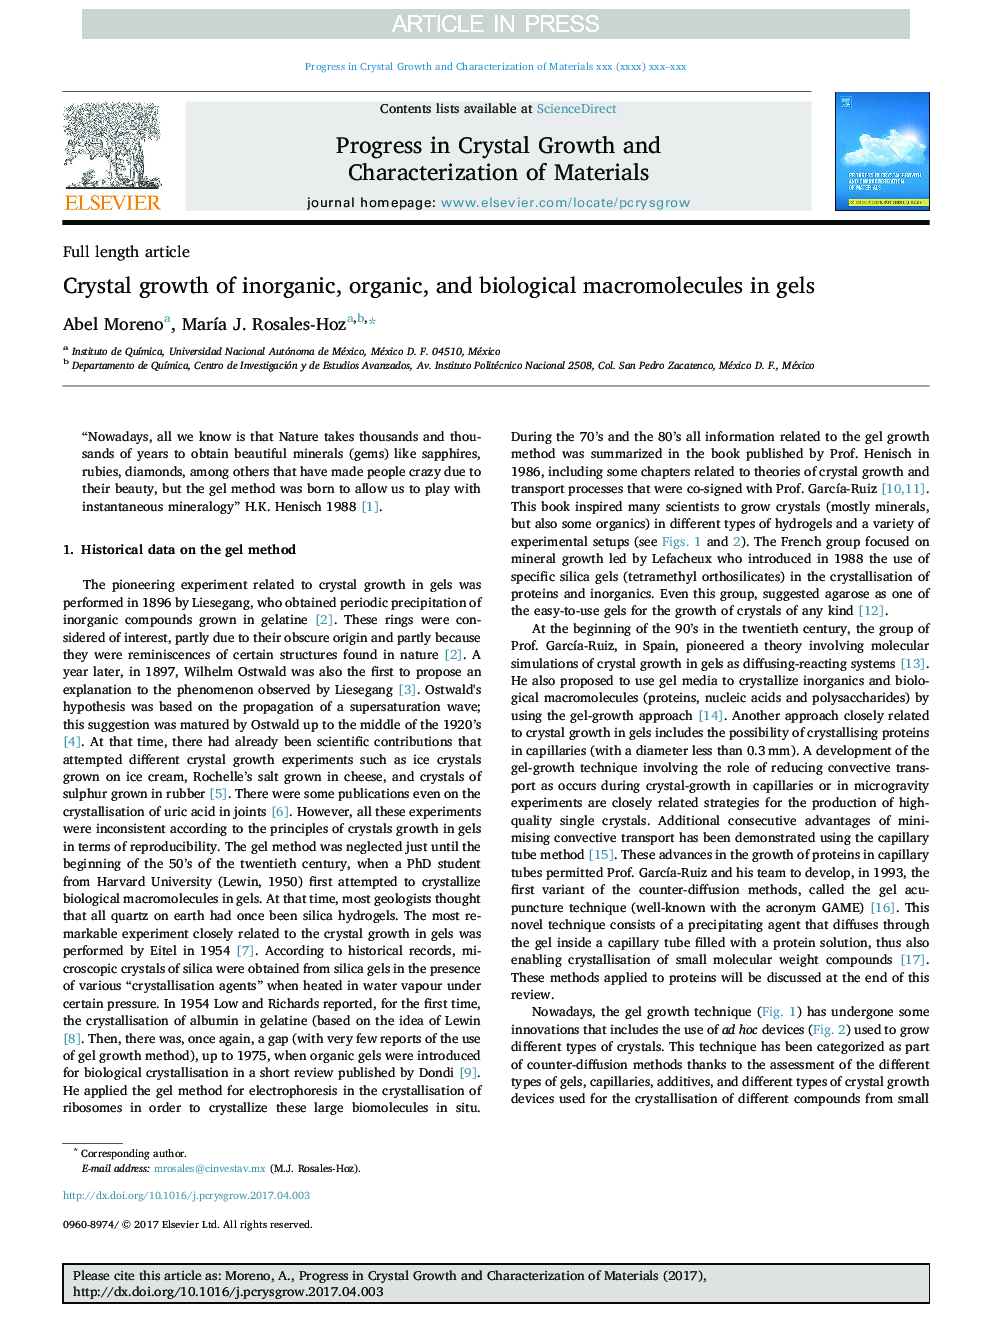 Crystal growth of inorganic, organic, and biological macromolecules in gels